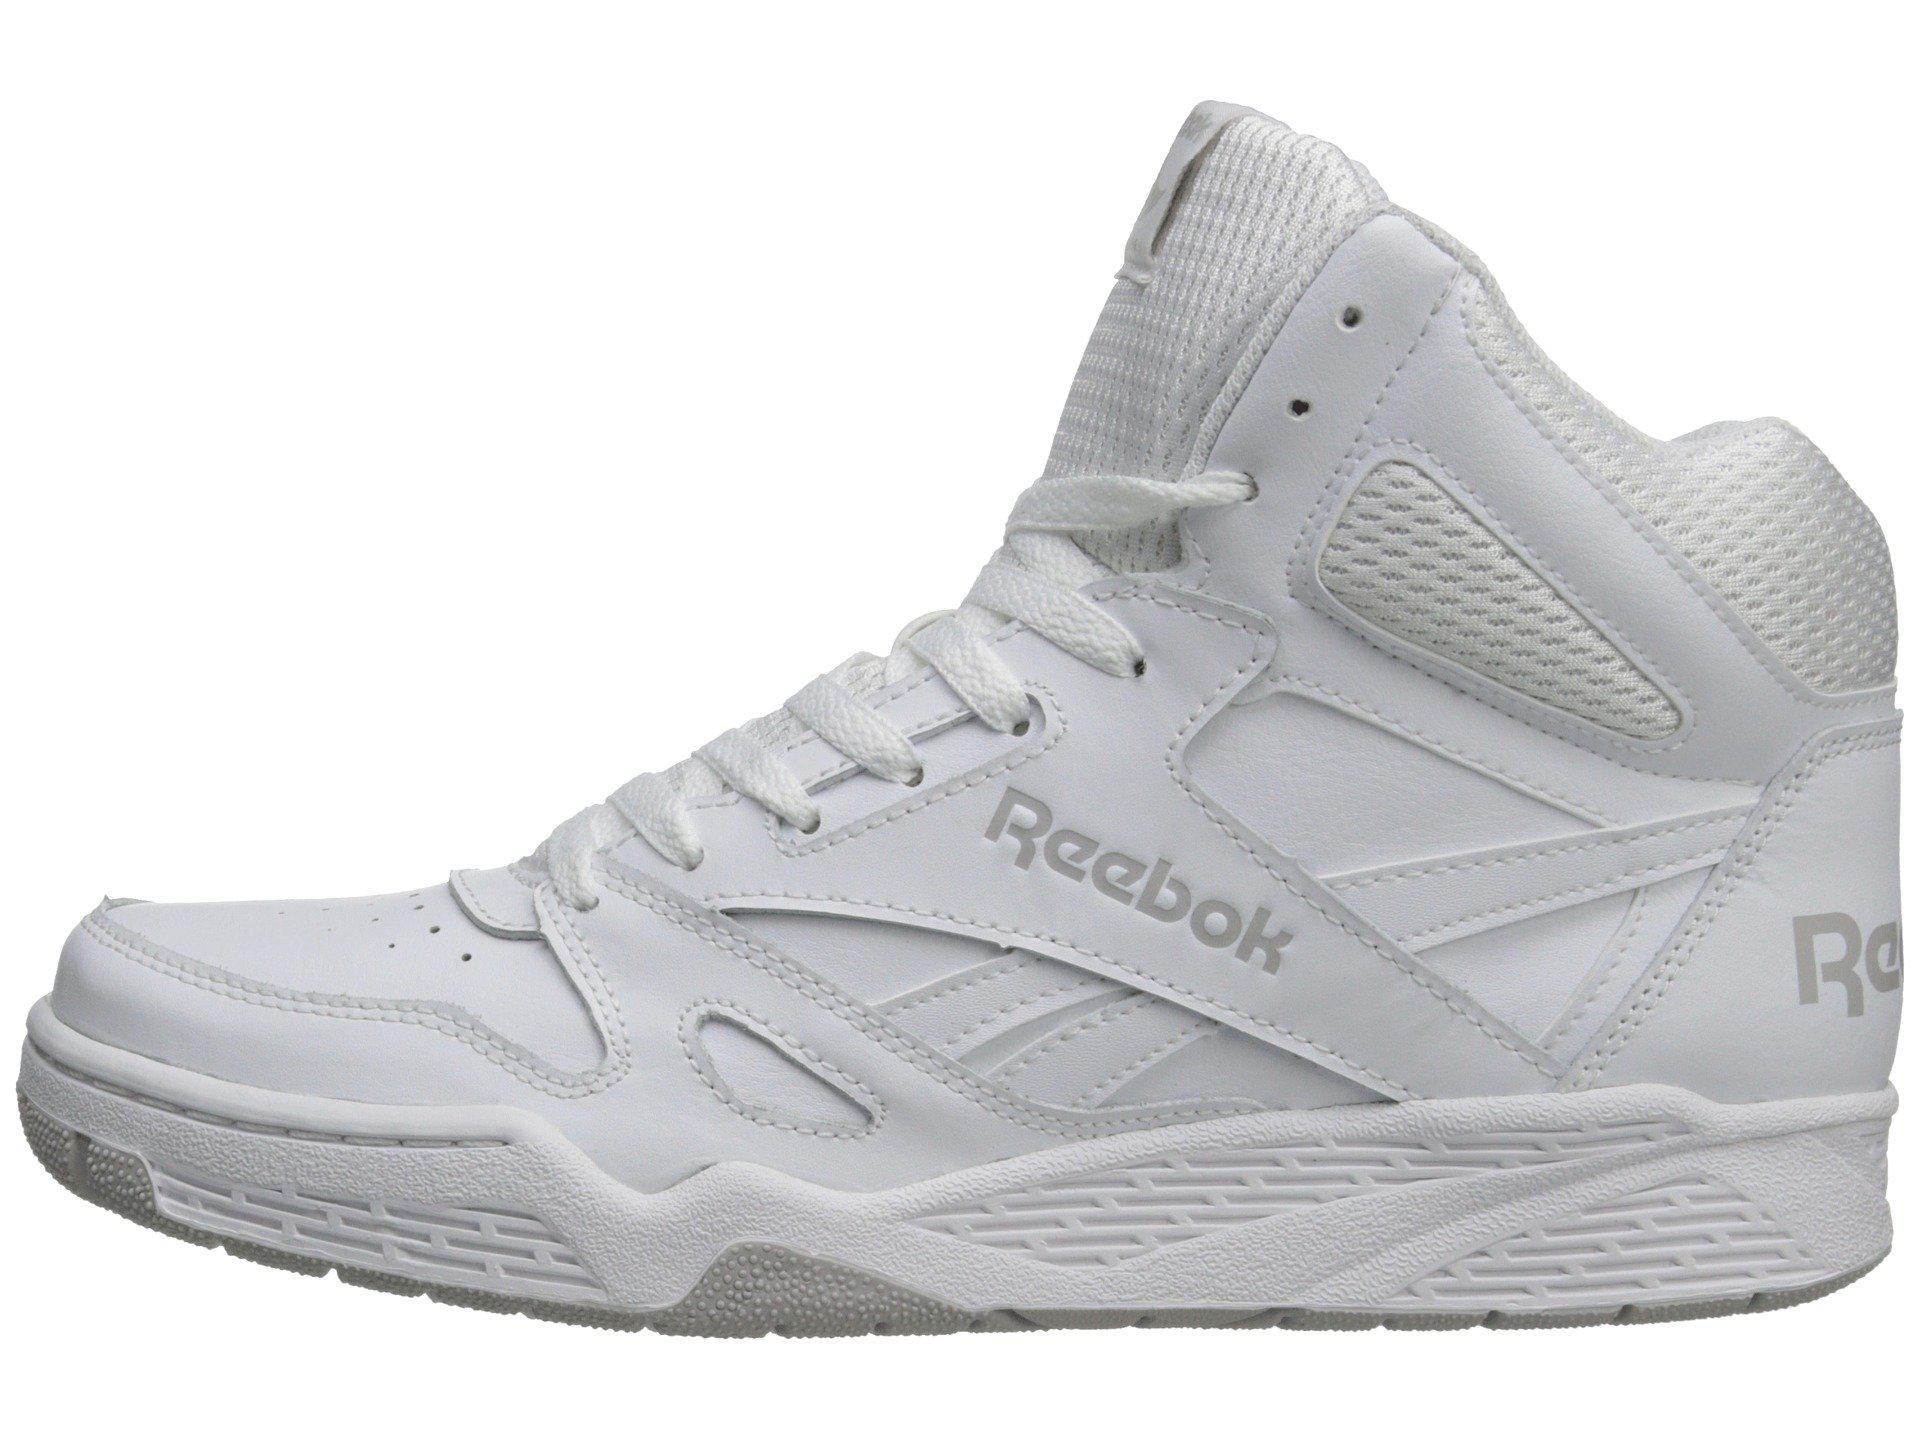 Reebok Synthetic Royal Bb4500 Hi (white/steel) Men's Basketball Shoes ...